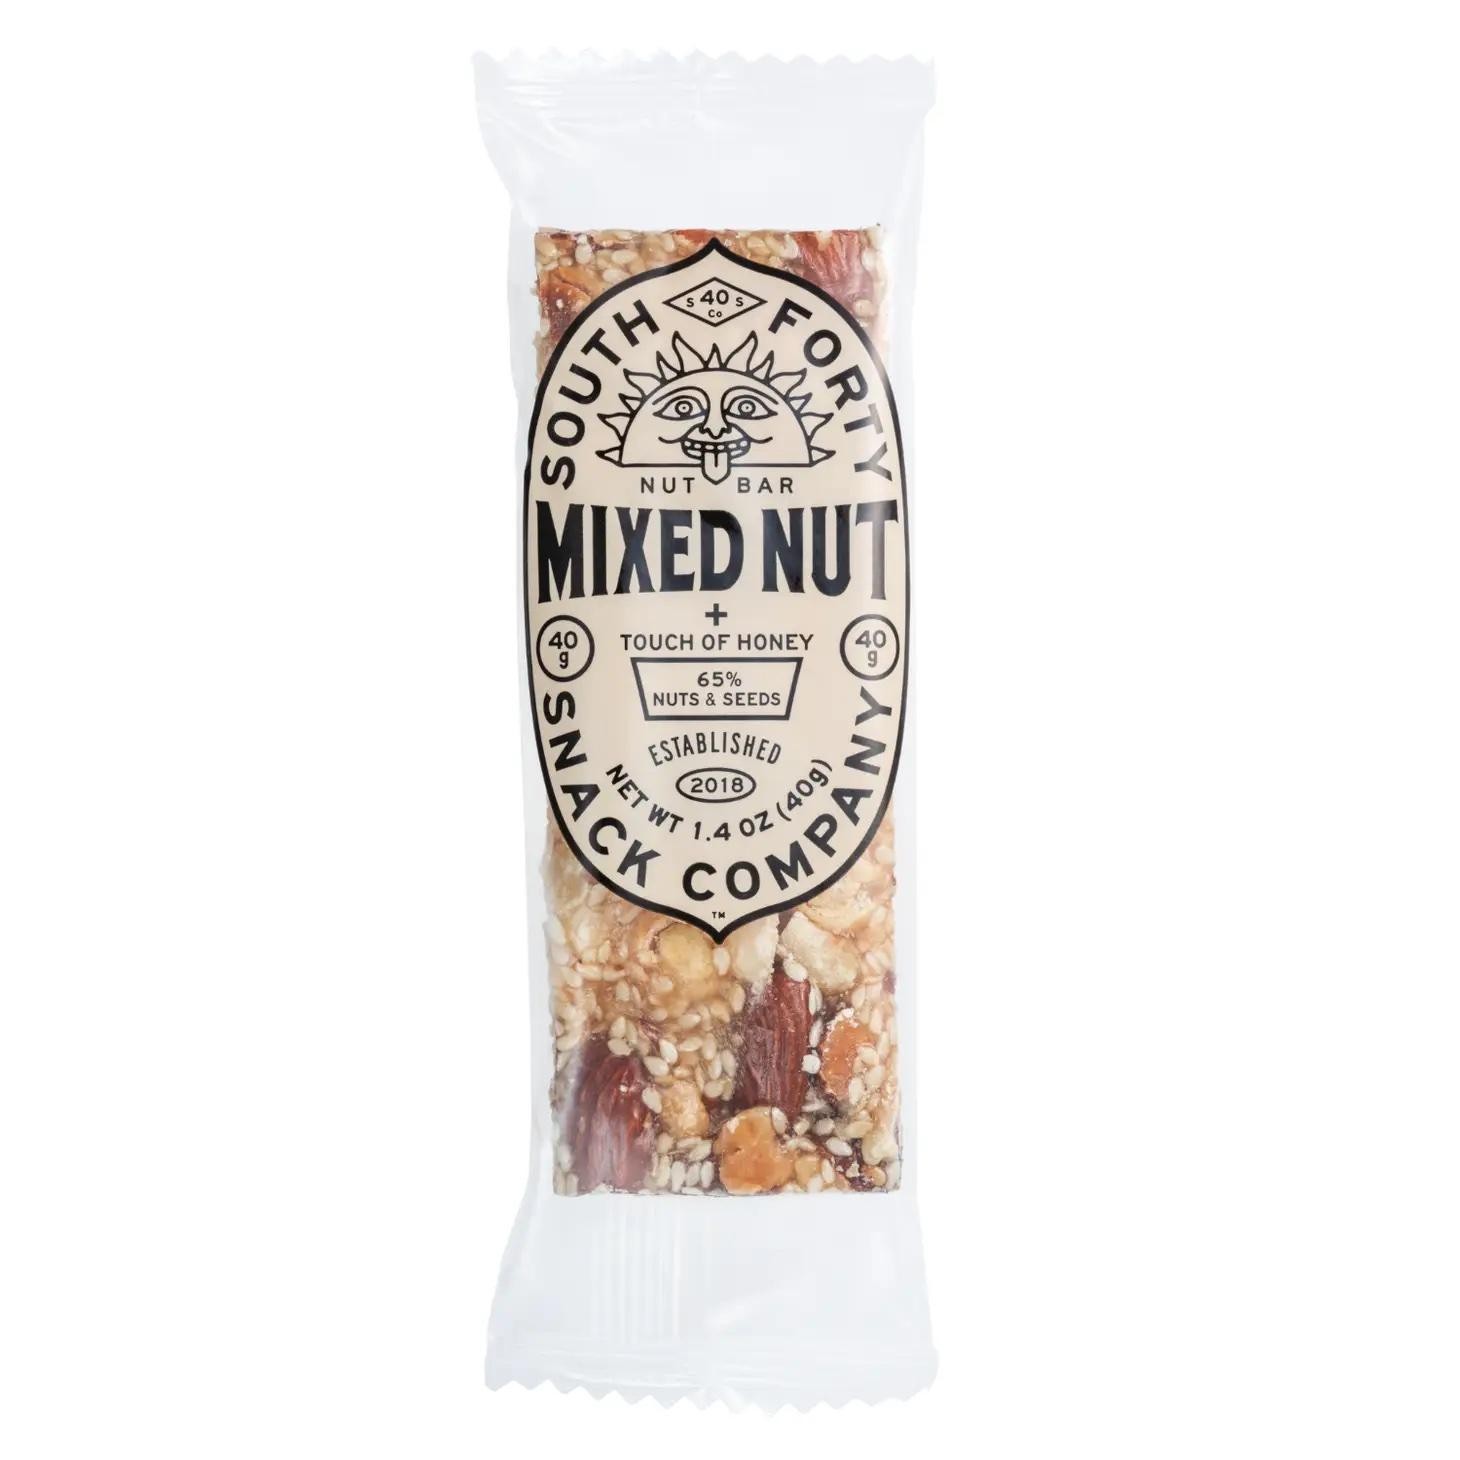 SOU Mixed nut bar